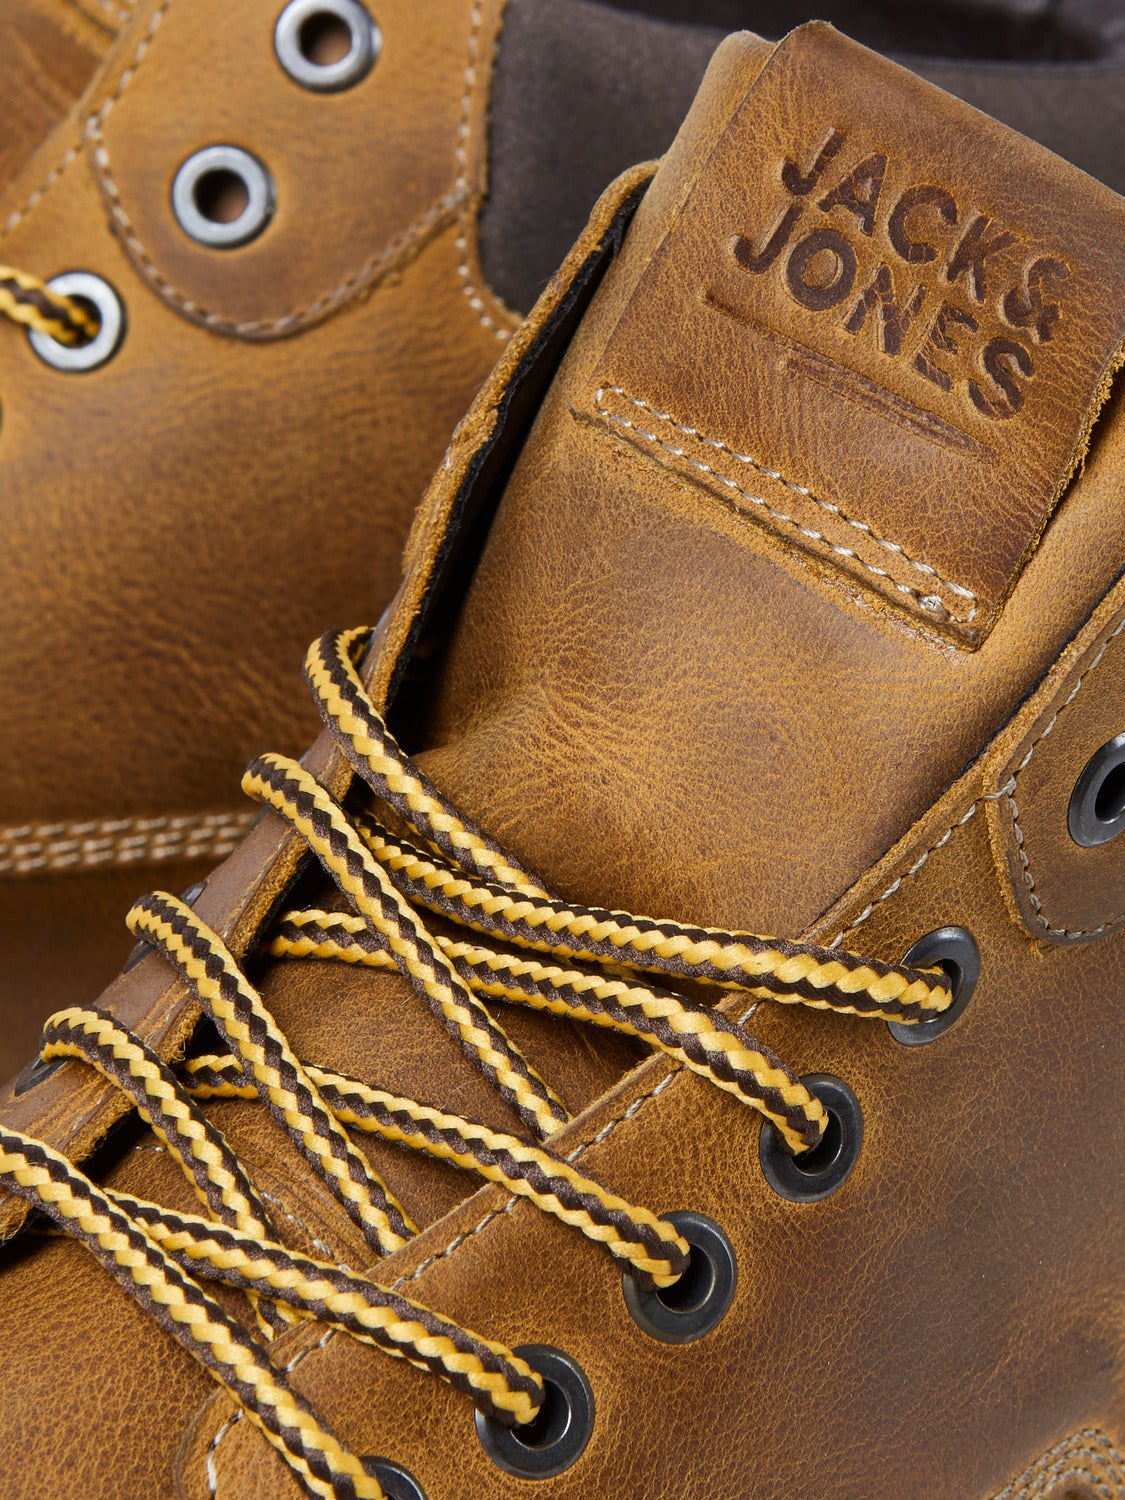 Jack & Jones Vintage Leather Logger Work Boots 8 12